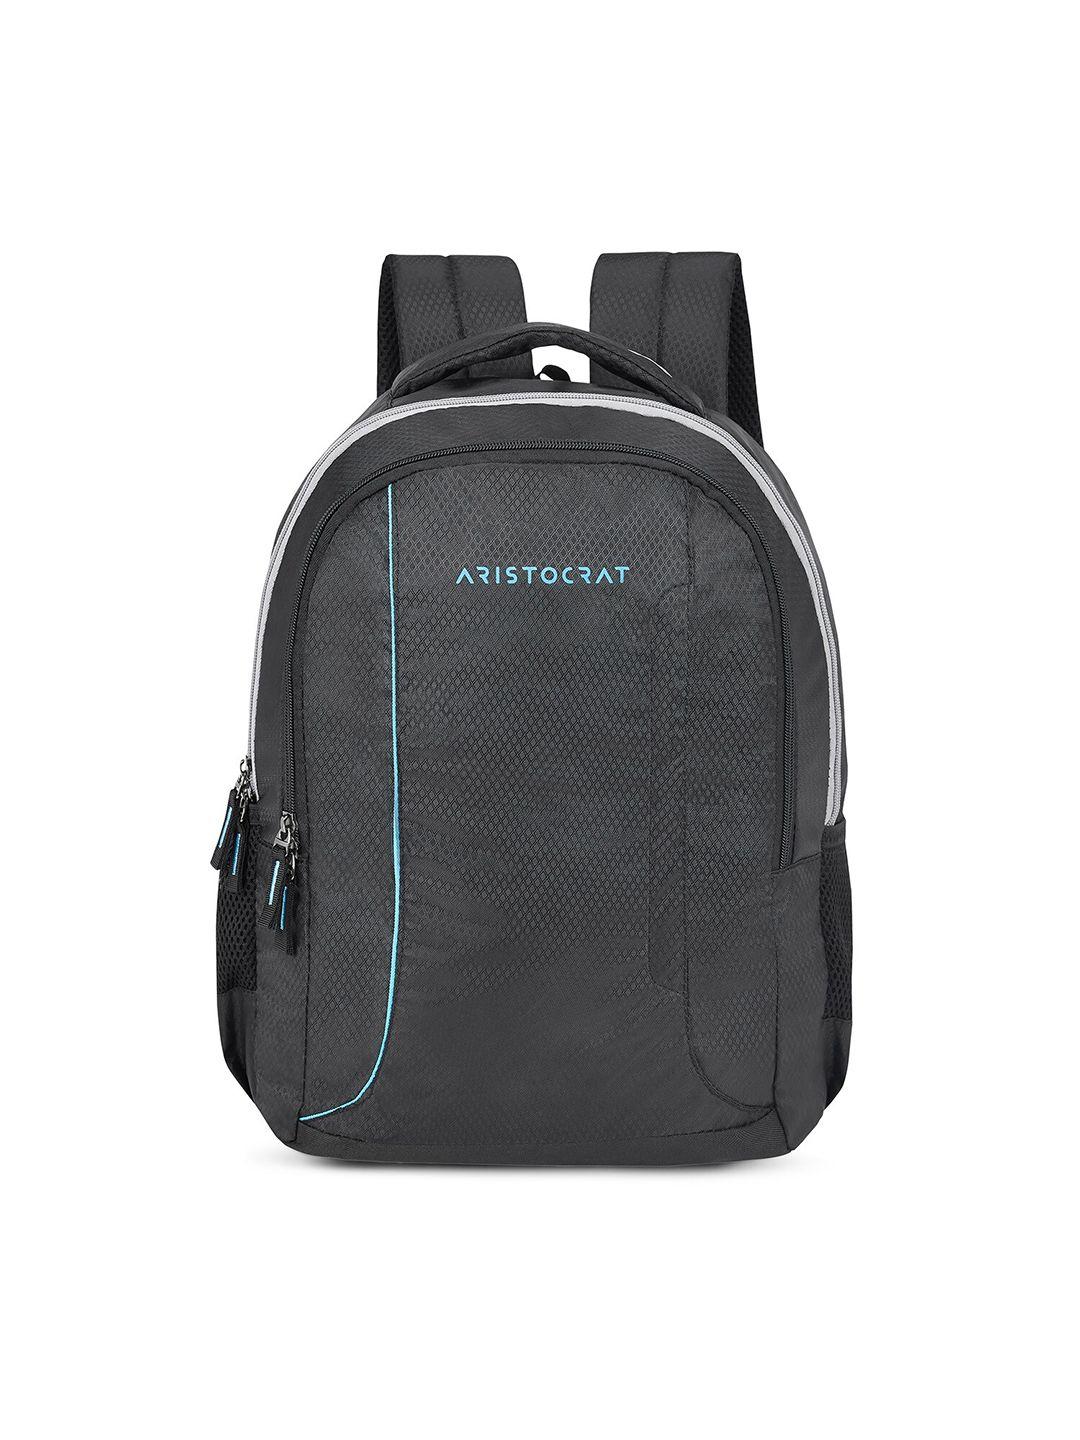 aristocrat unisex black & blue backpack